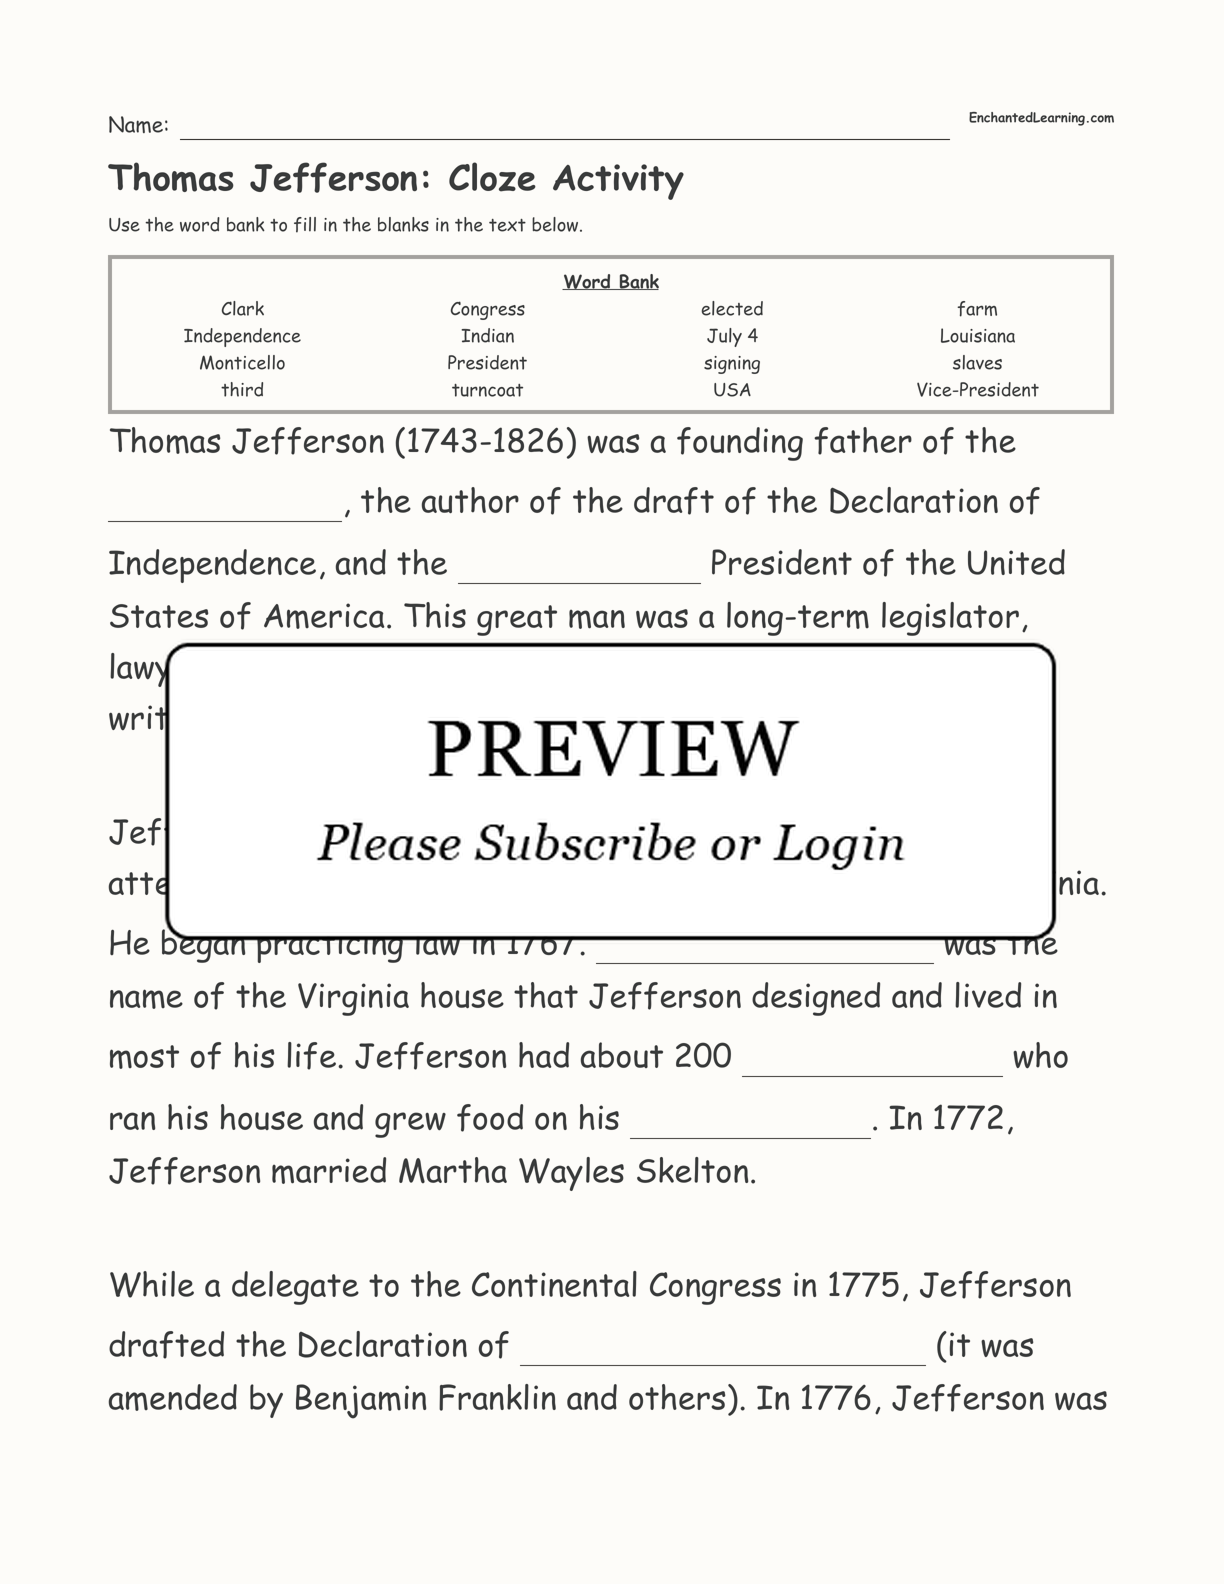 Thomas Jefferson: Cloze Activity interactive worksheet page 1